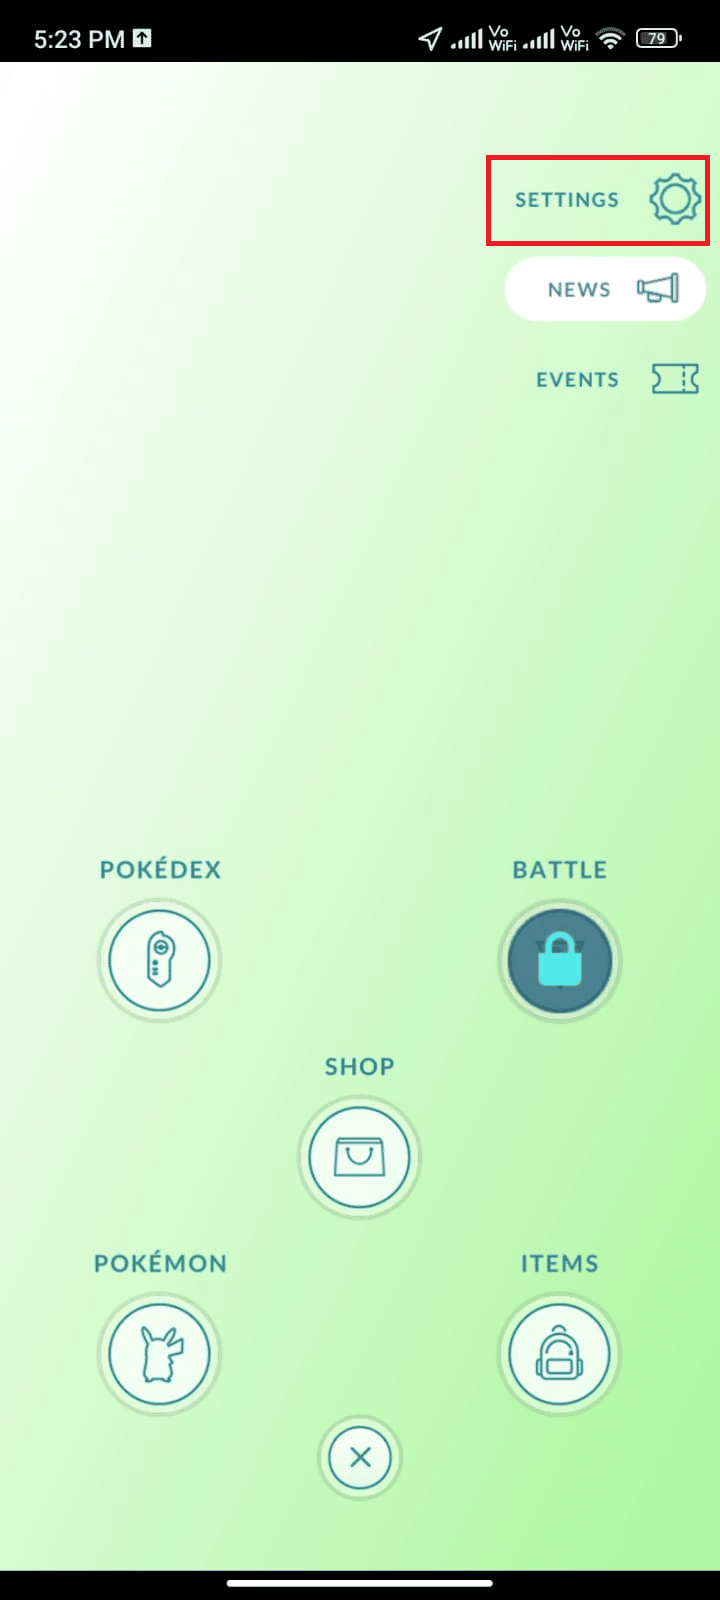 tap Settings. Fix Pokémon Go Error 26